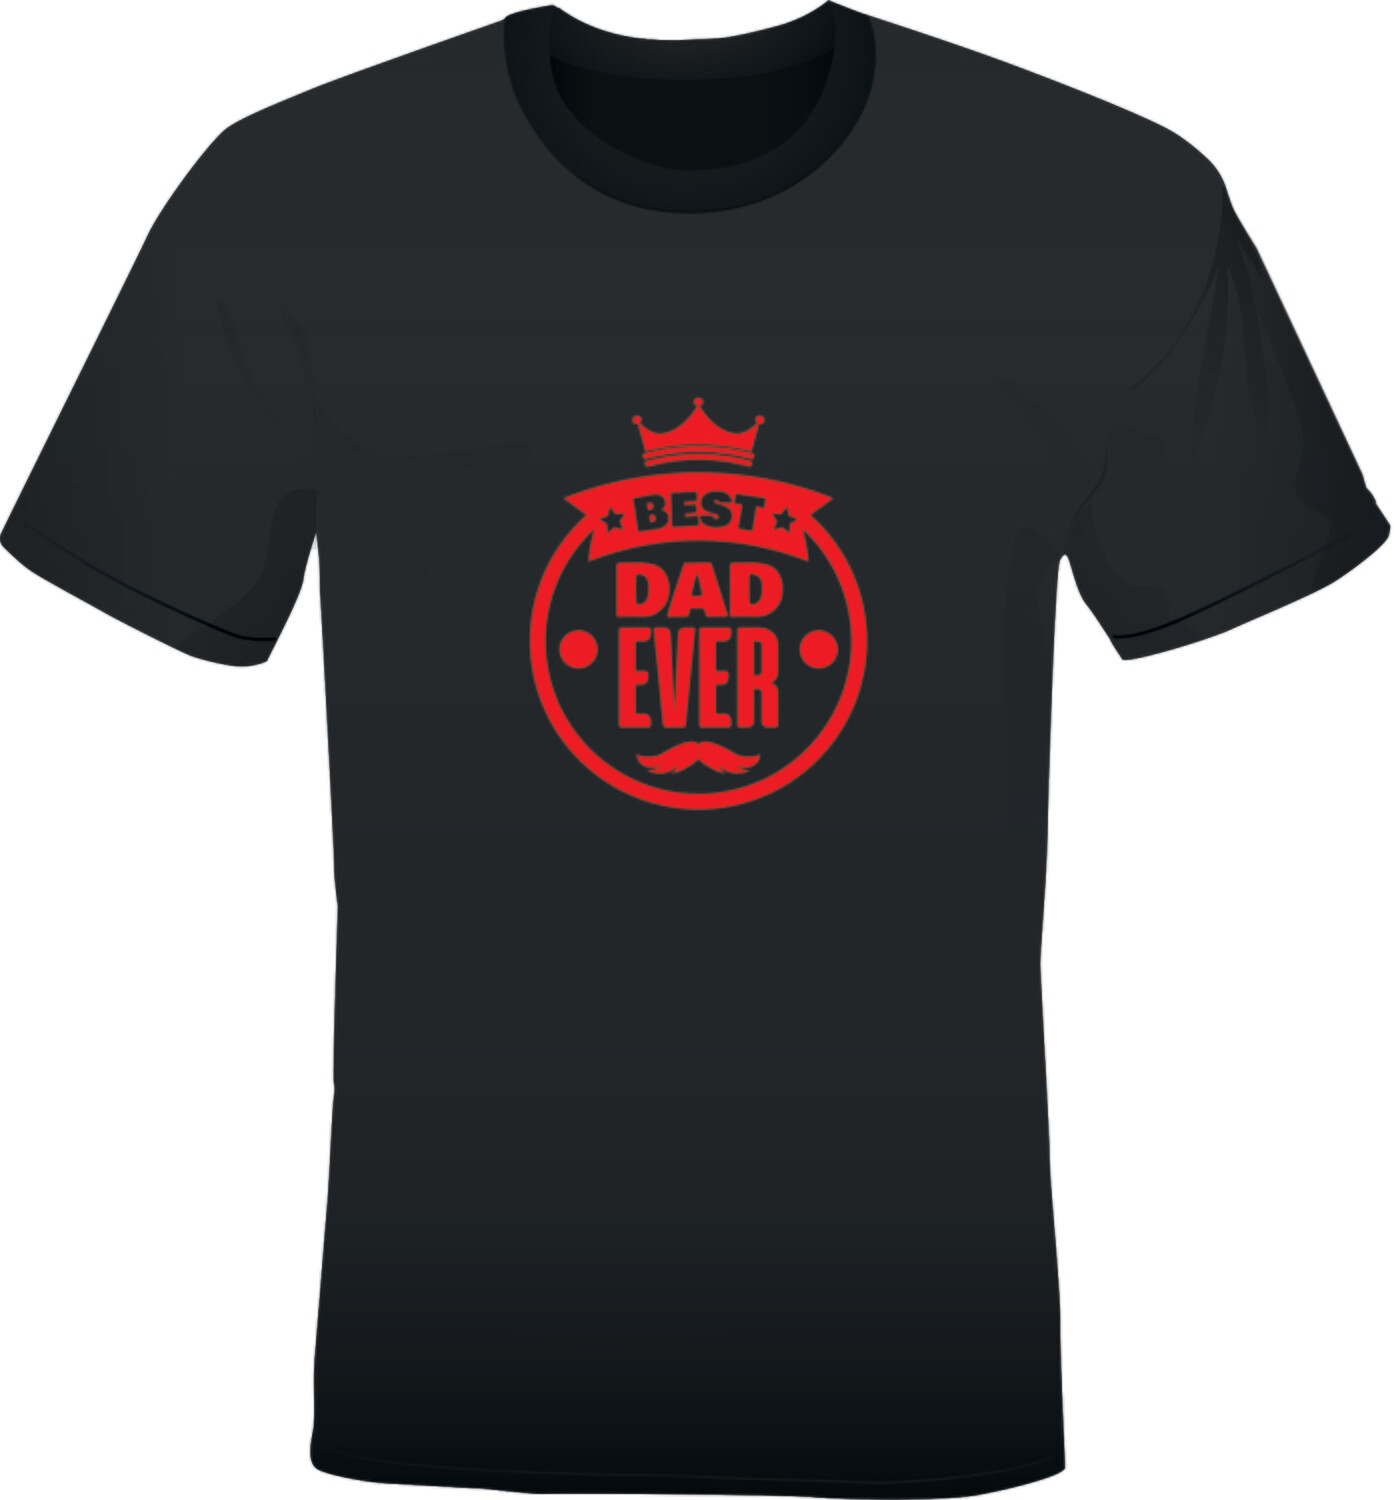 'BEST DAD EVER' MEN'S PRINTED T-SHIRT (BLACK)